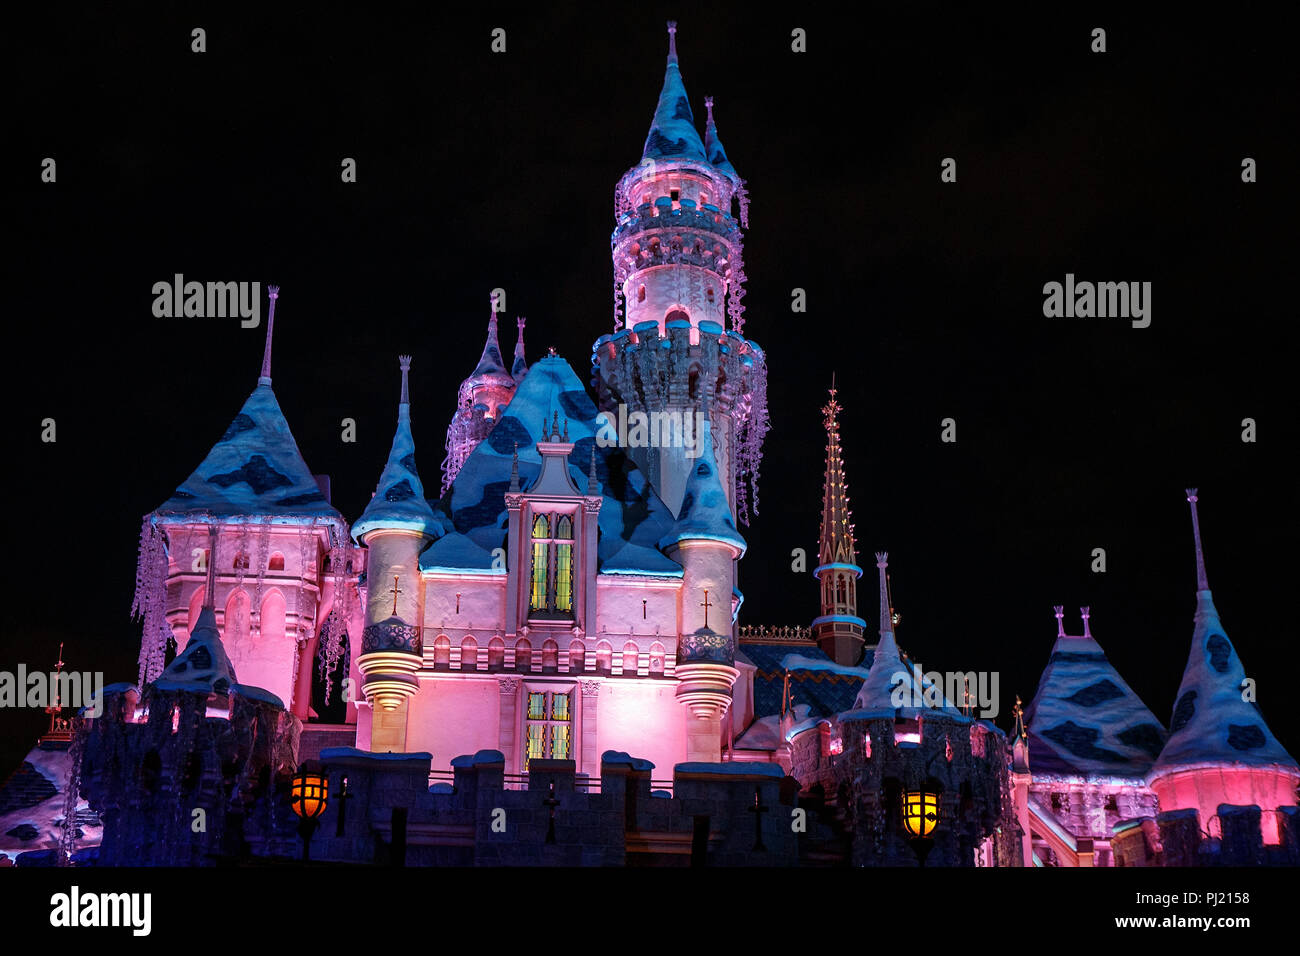 Sleeping Beauty's Castle at night, Disneyland, Anaheim, California, United States of America Stock Photo